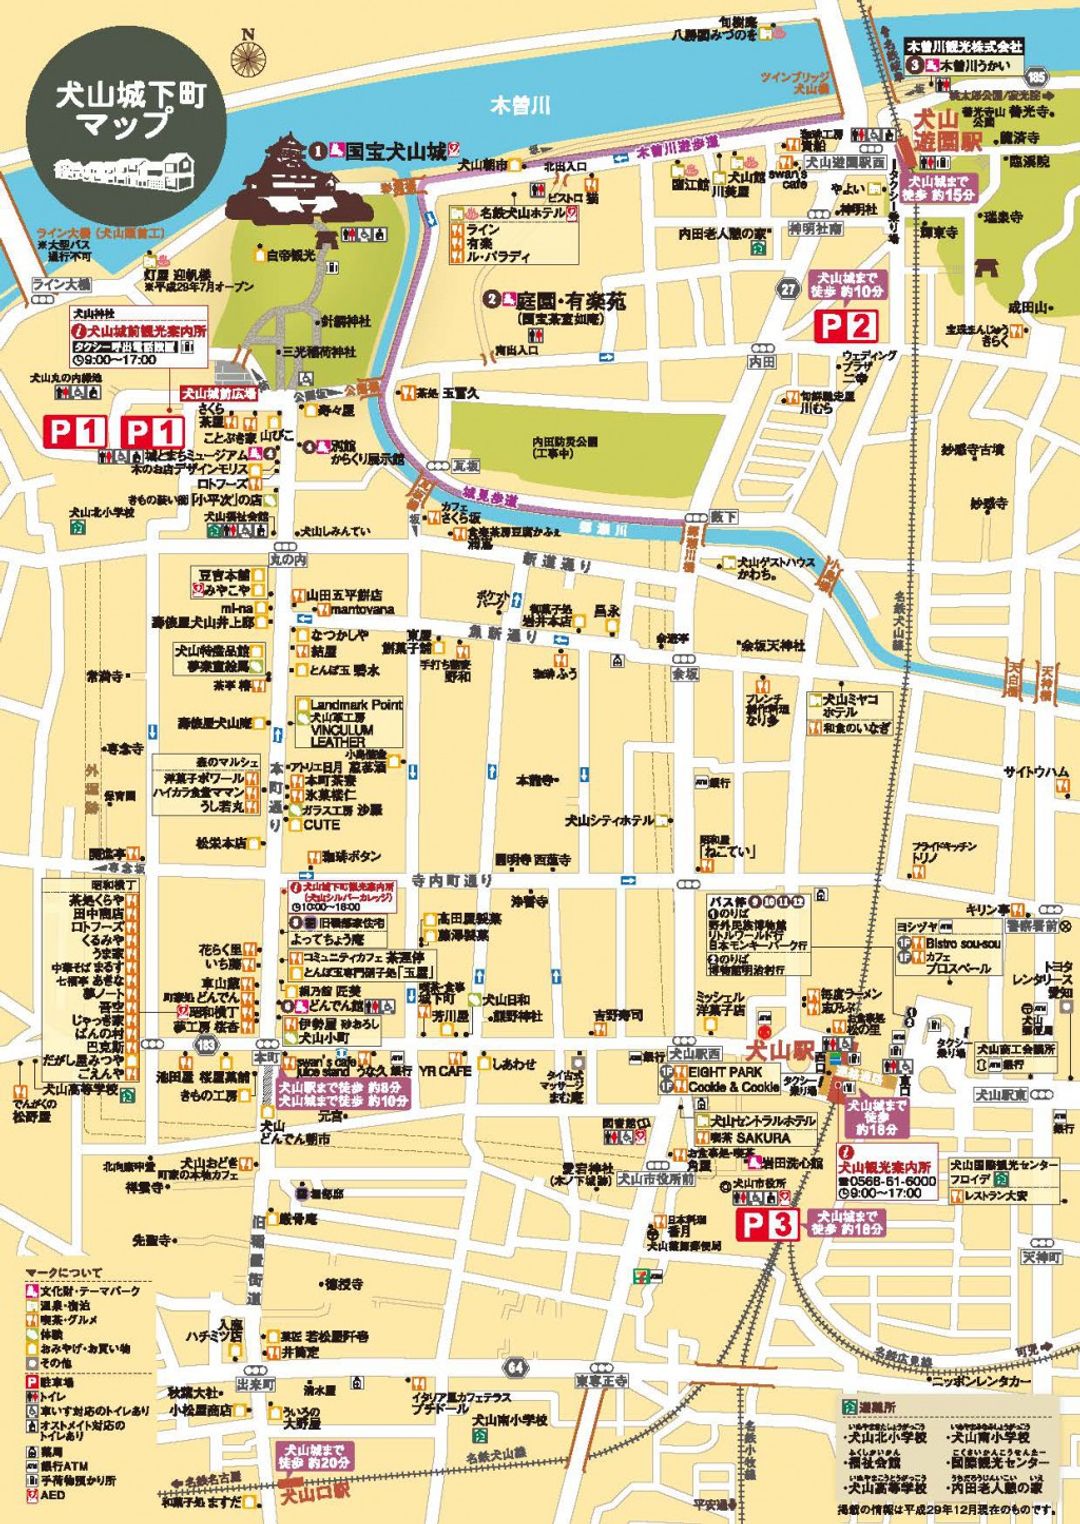 犬山城地圖（資料來源：https://inuyama.gr.jp/map-transportguide/pamphlet）